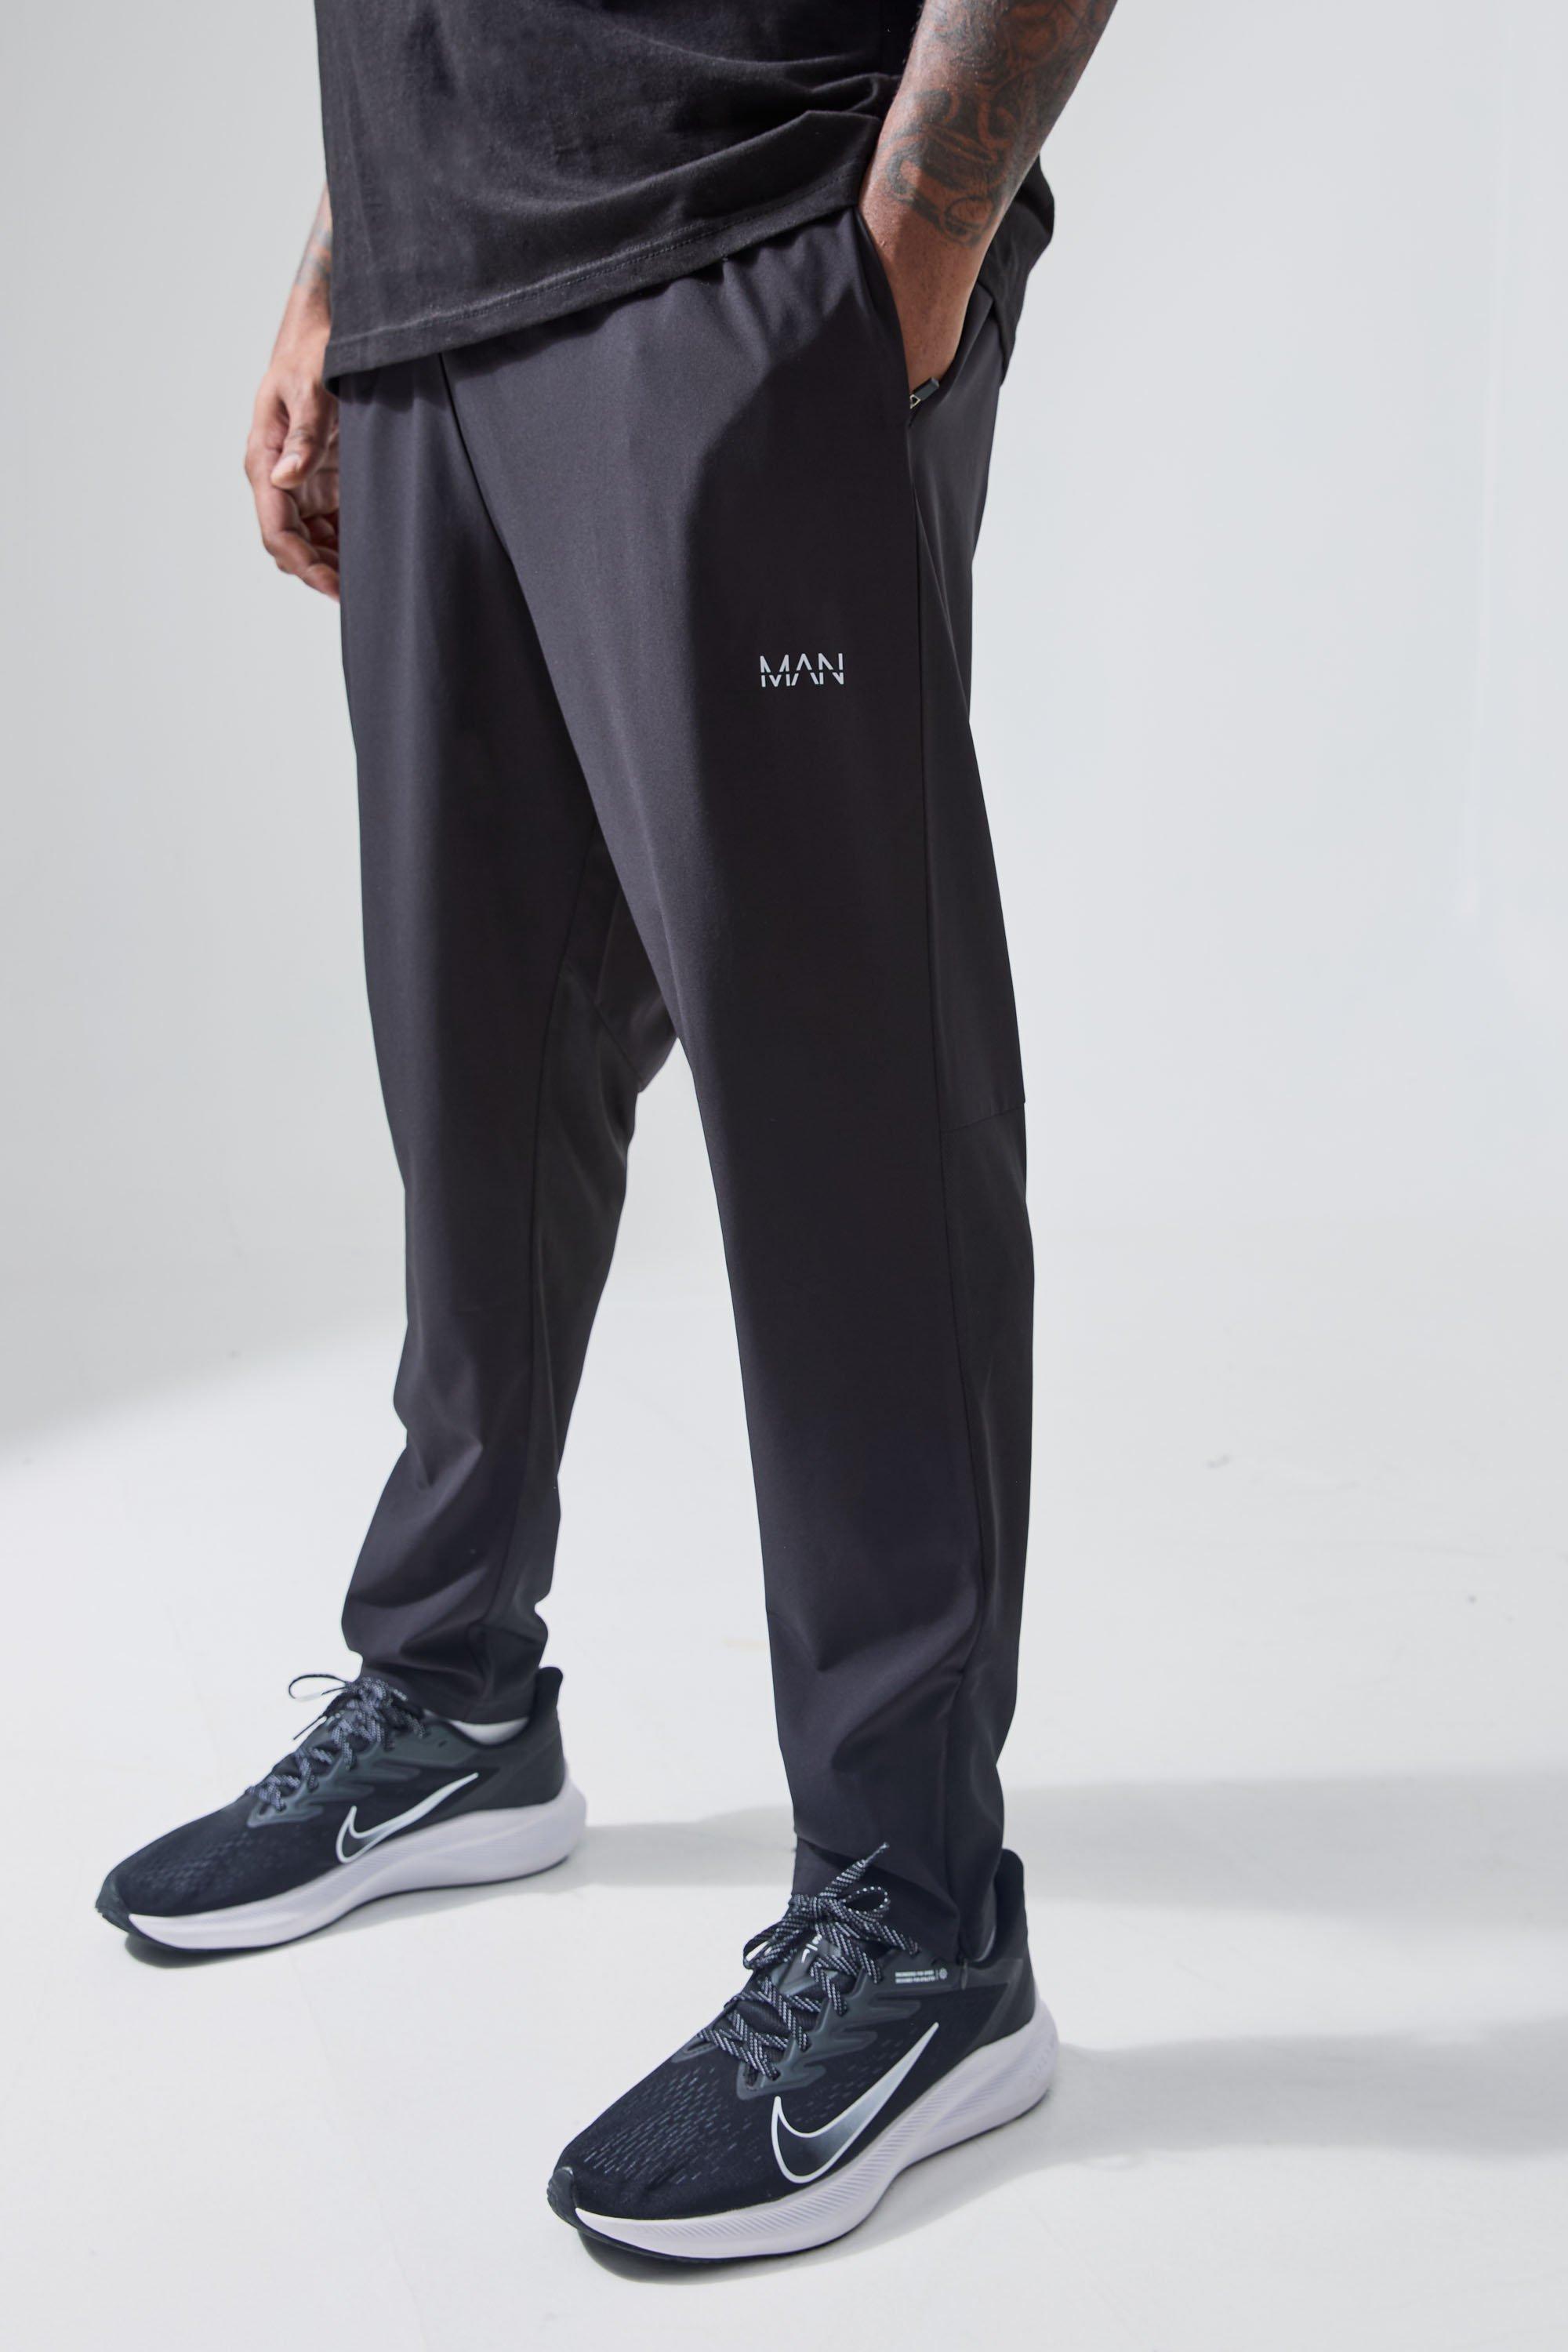 Image of Pantaloni tuta Plus Size Man Active Gym per alta performance con tasche e zip, Nero